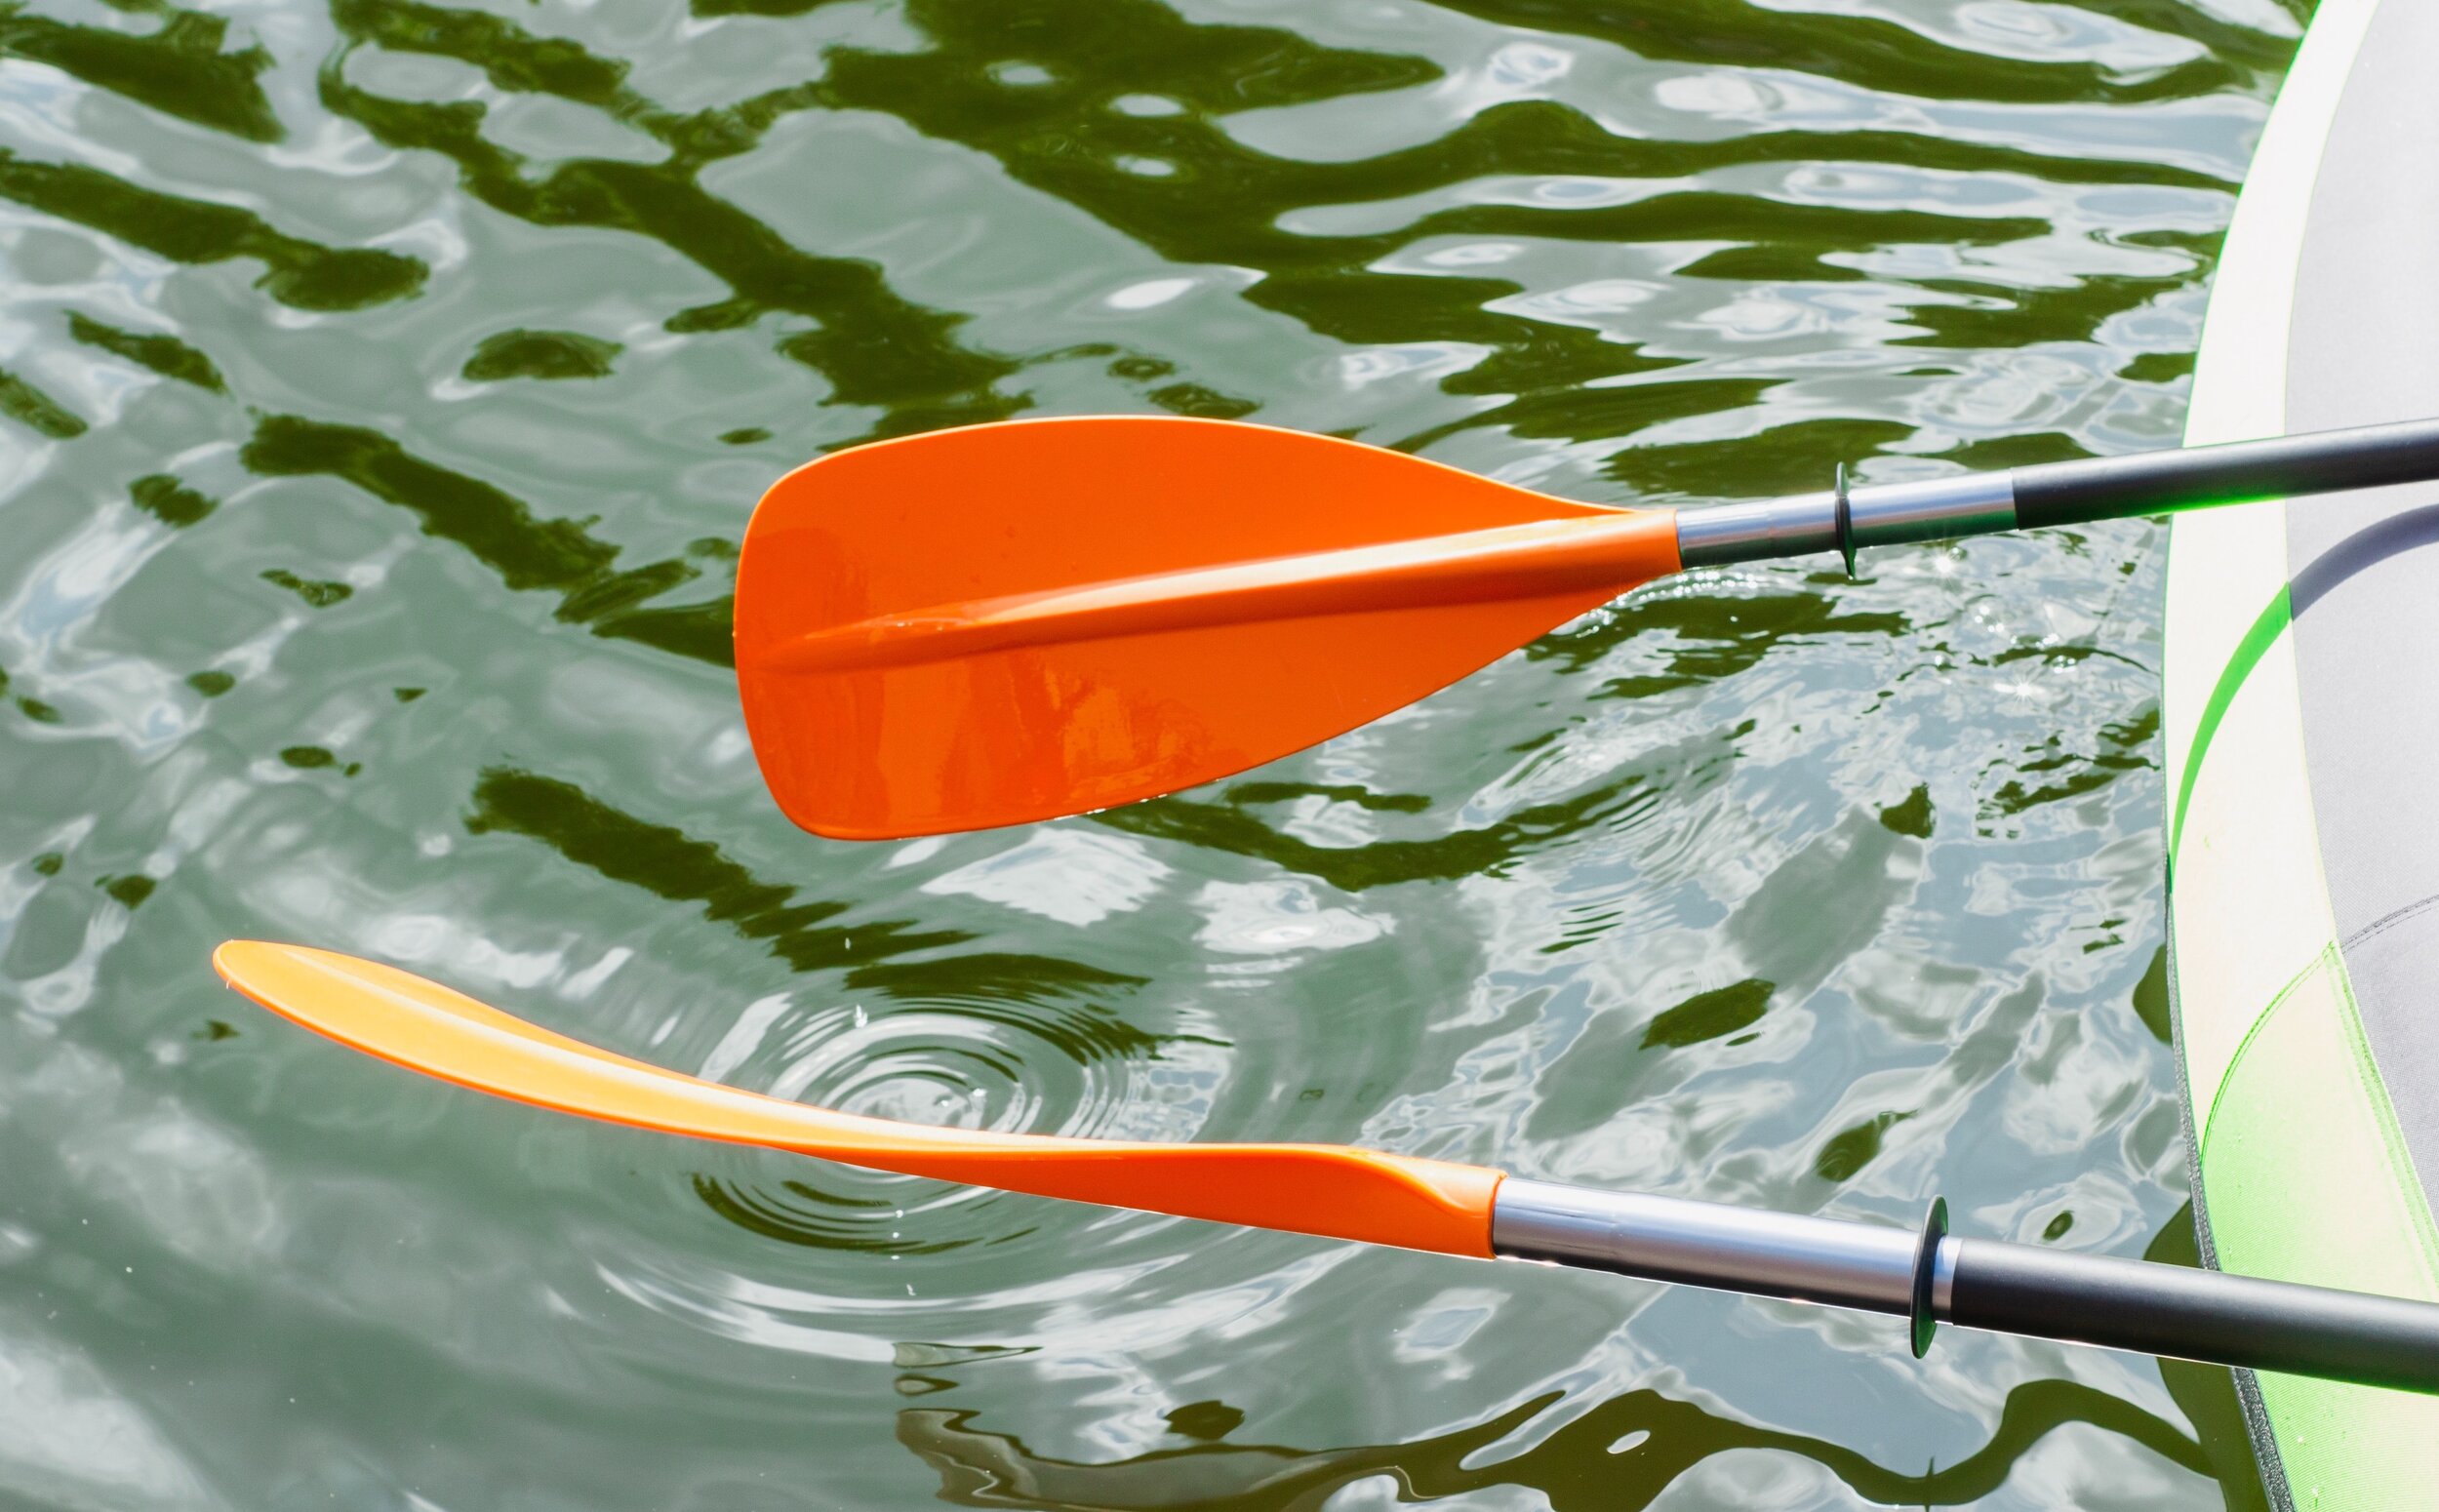 kayaking-canoeing louis-hansel-shotsoflouis-tder6zHt1go-unsplash.jpg